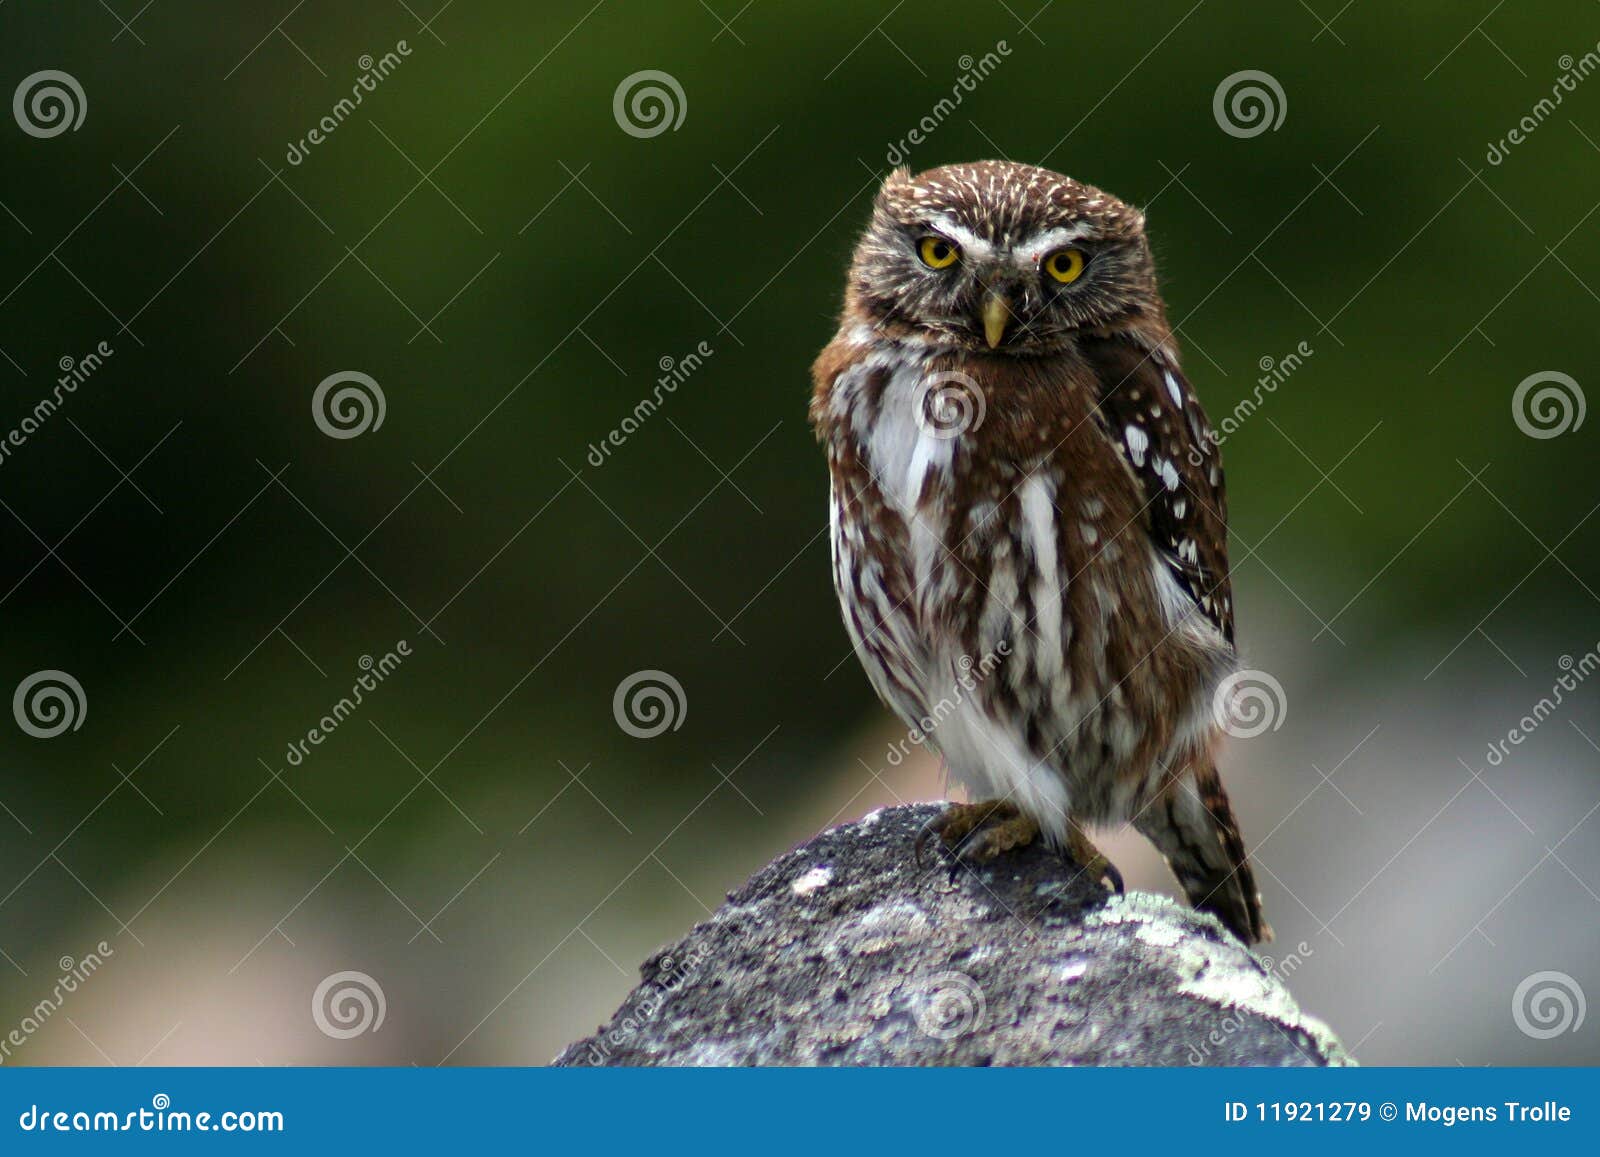 austral pygmy owl, patagonia, argentina